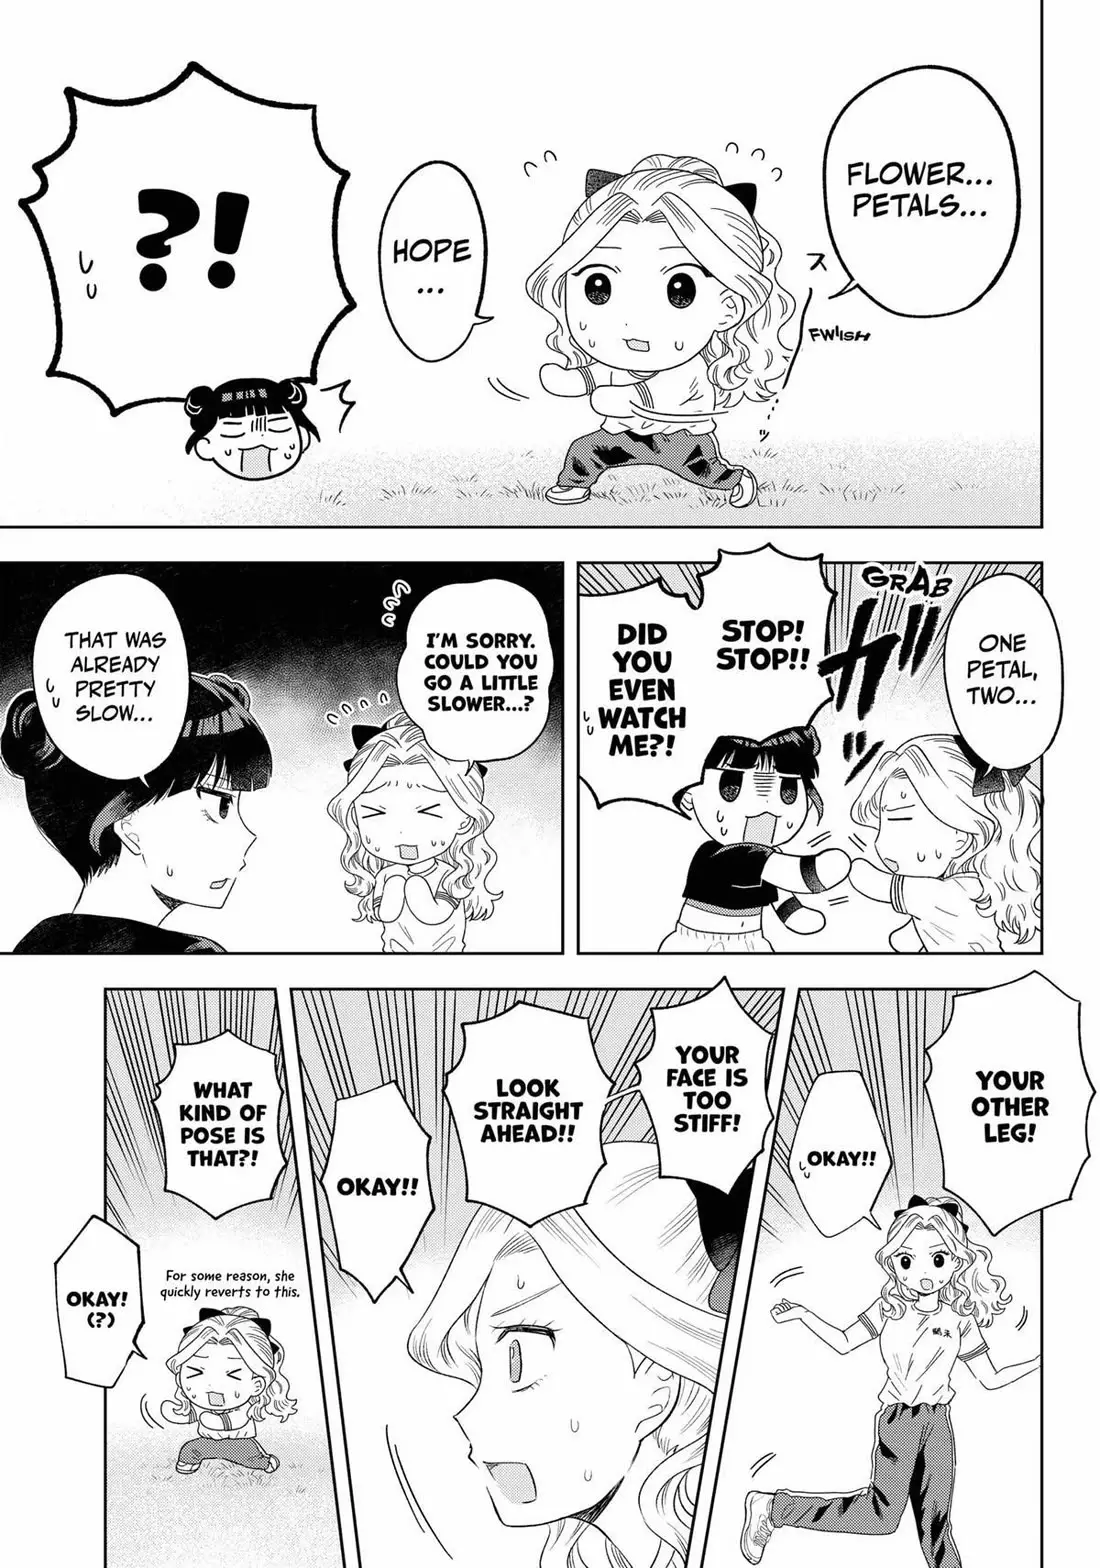 Tsuruko Returns The Favor - 18 page 9-6004f52a